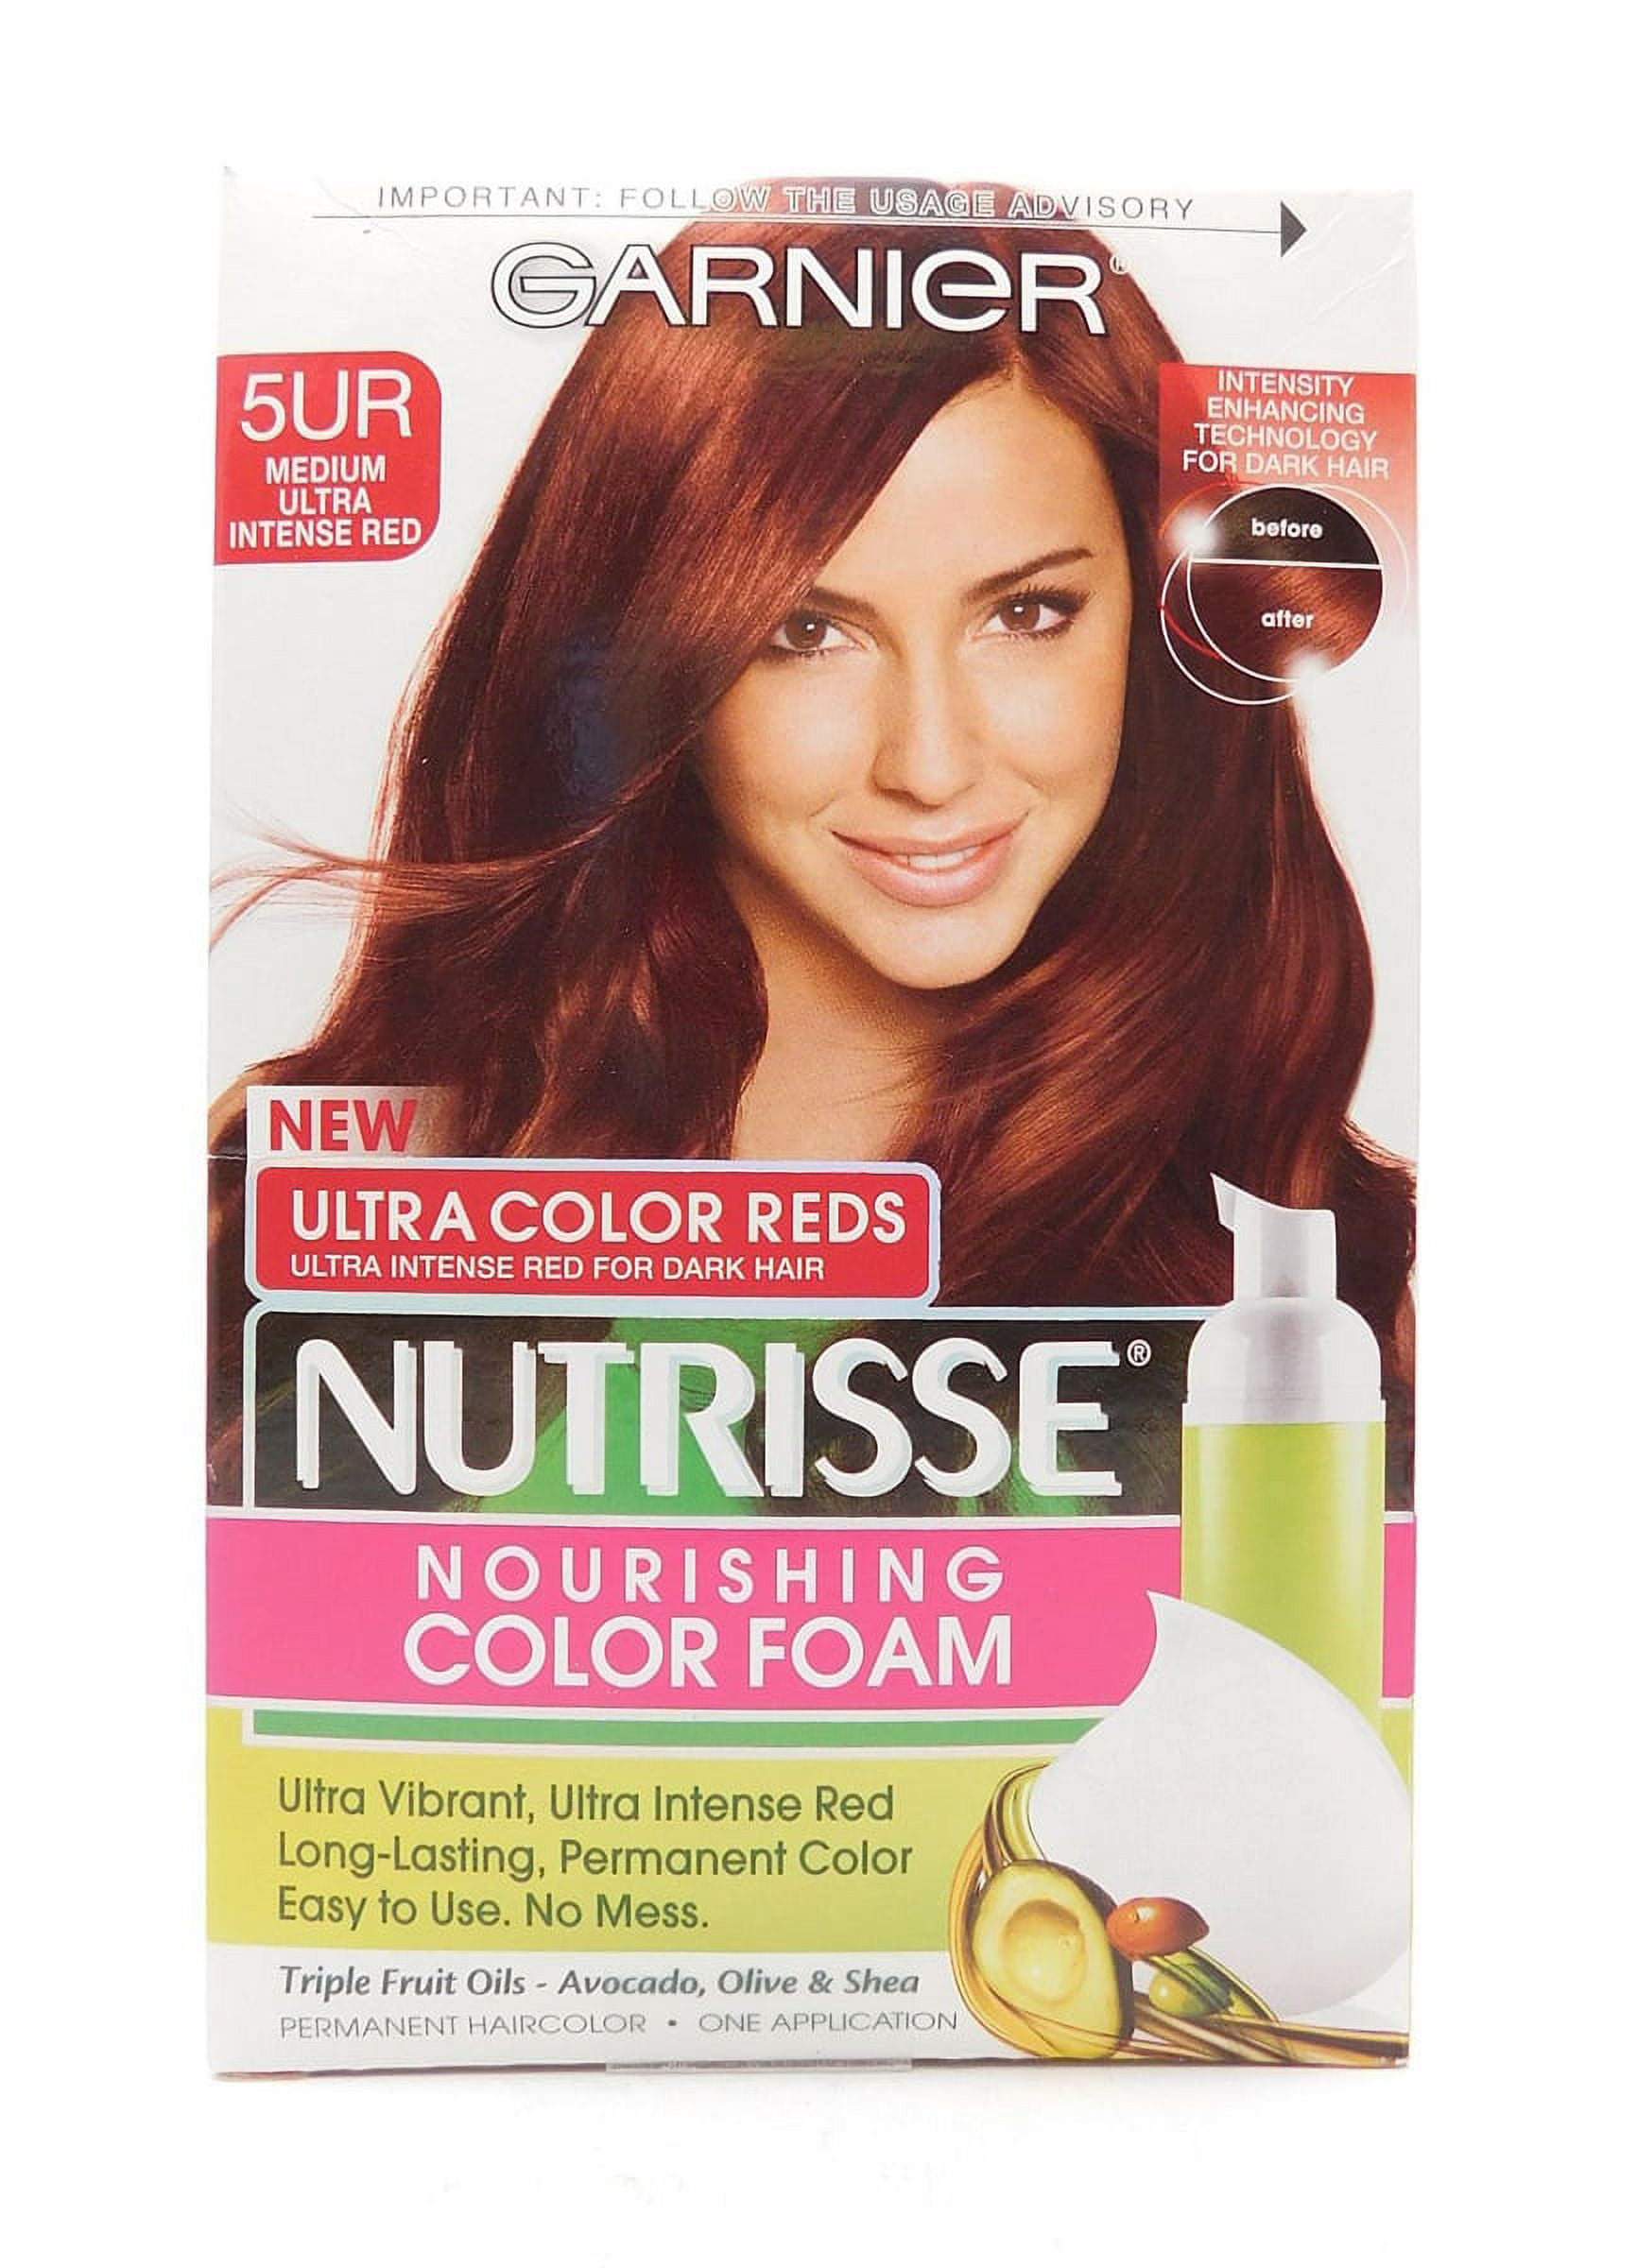 Garnier Nutrisse Ultra Color Nourishing Bold Permanent Hair Color Creme RC1 Med Copper Red